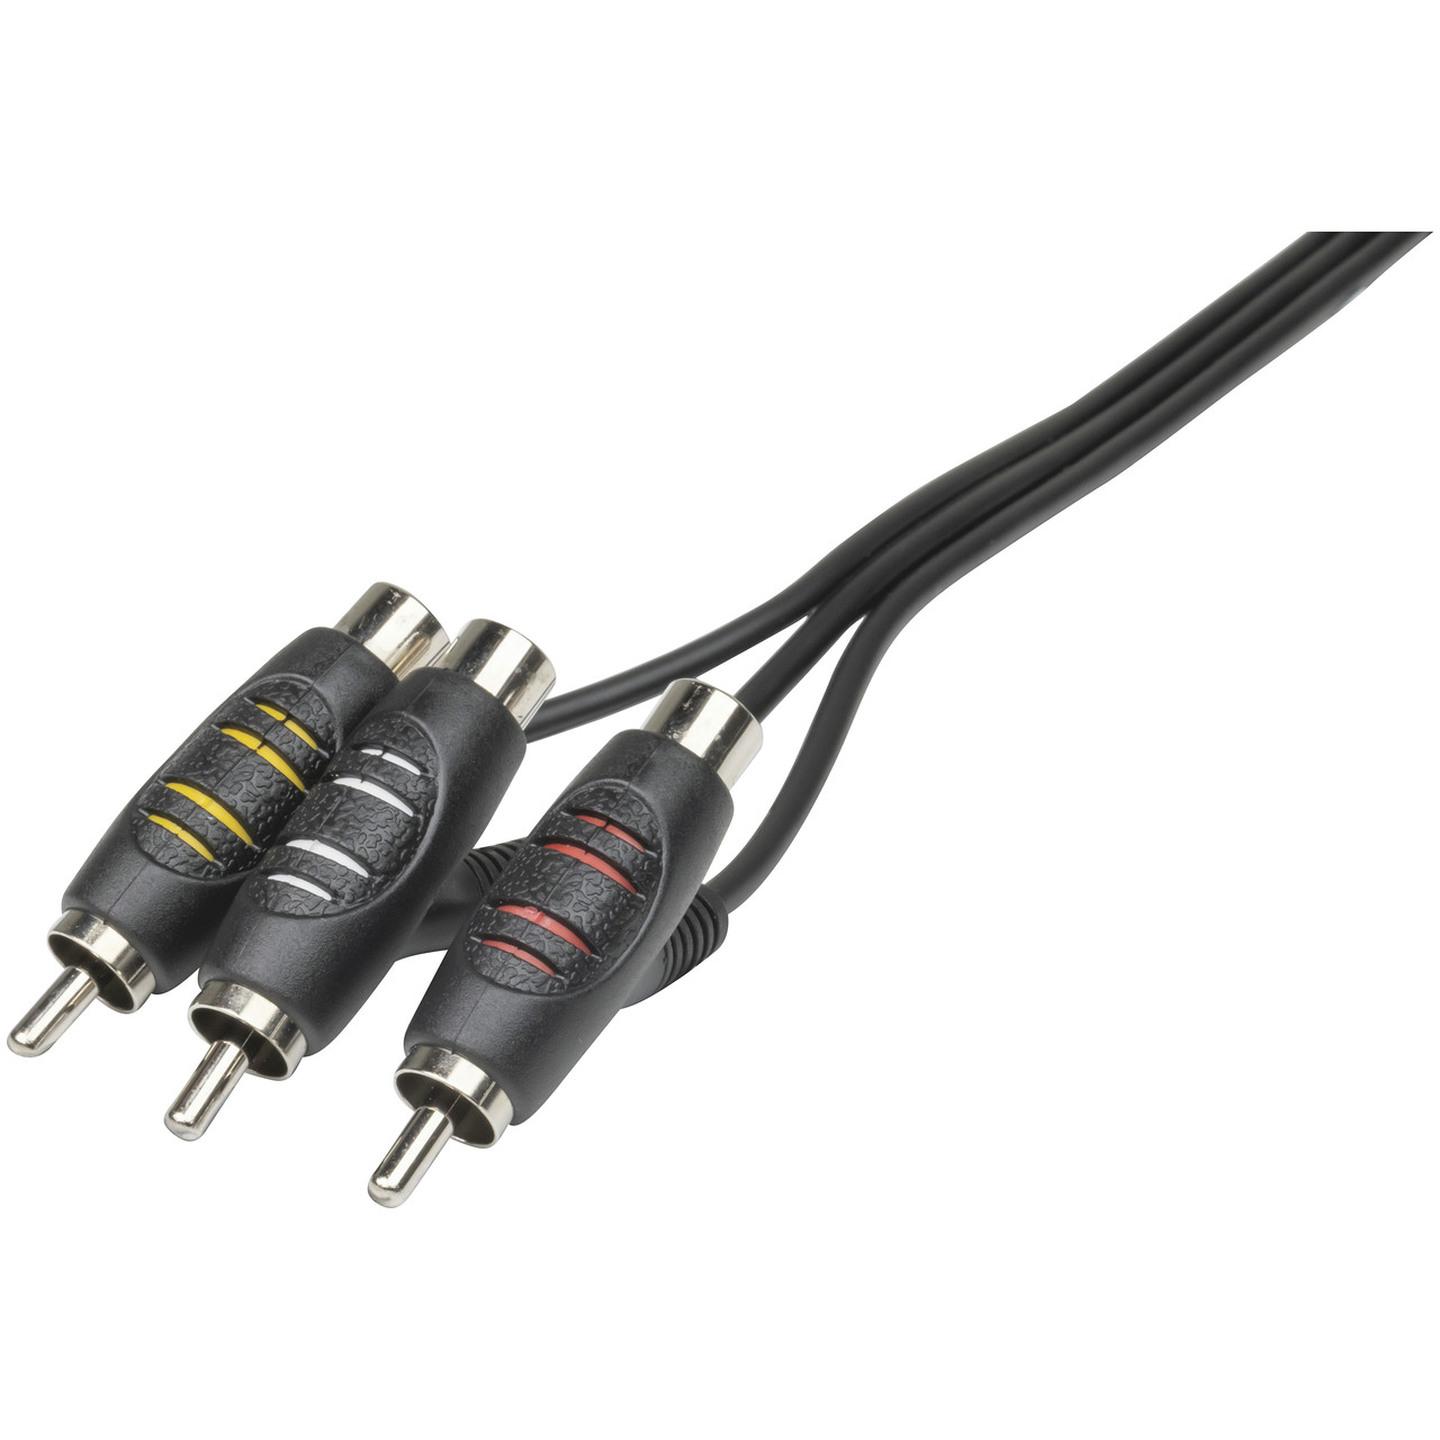 3 x RCA Piggyback Plugs to 3 RCA Plugs - 1.5m